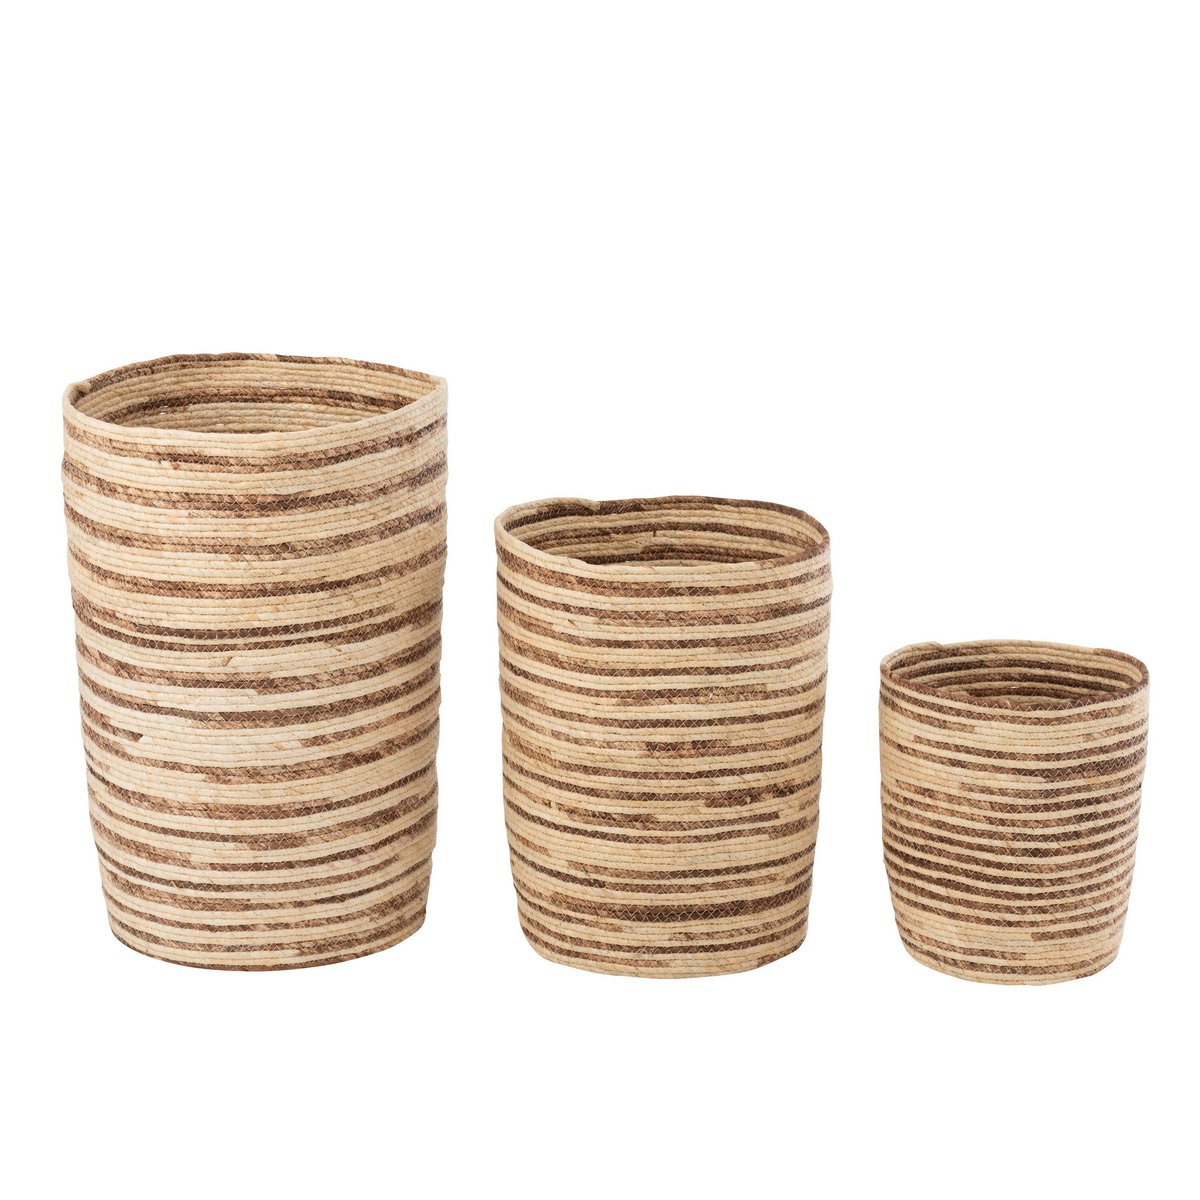 Set of 3 corn baskets, natural brown